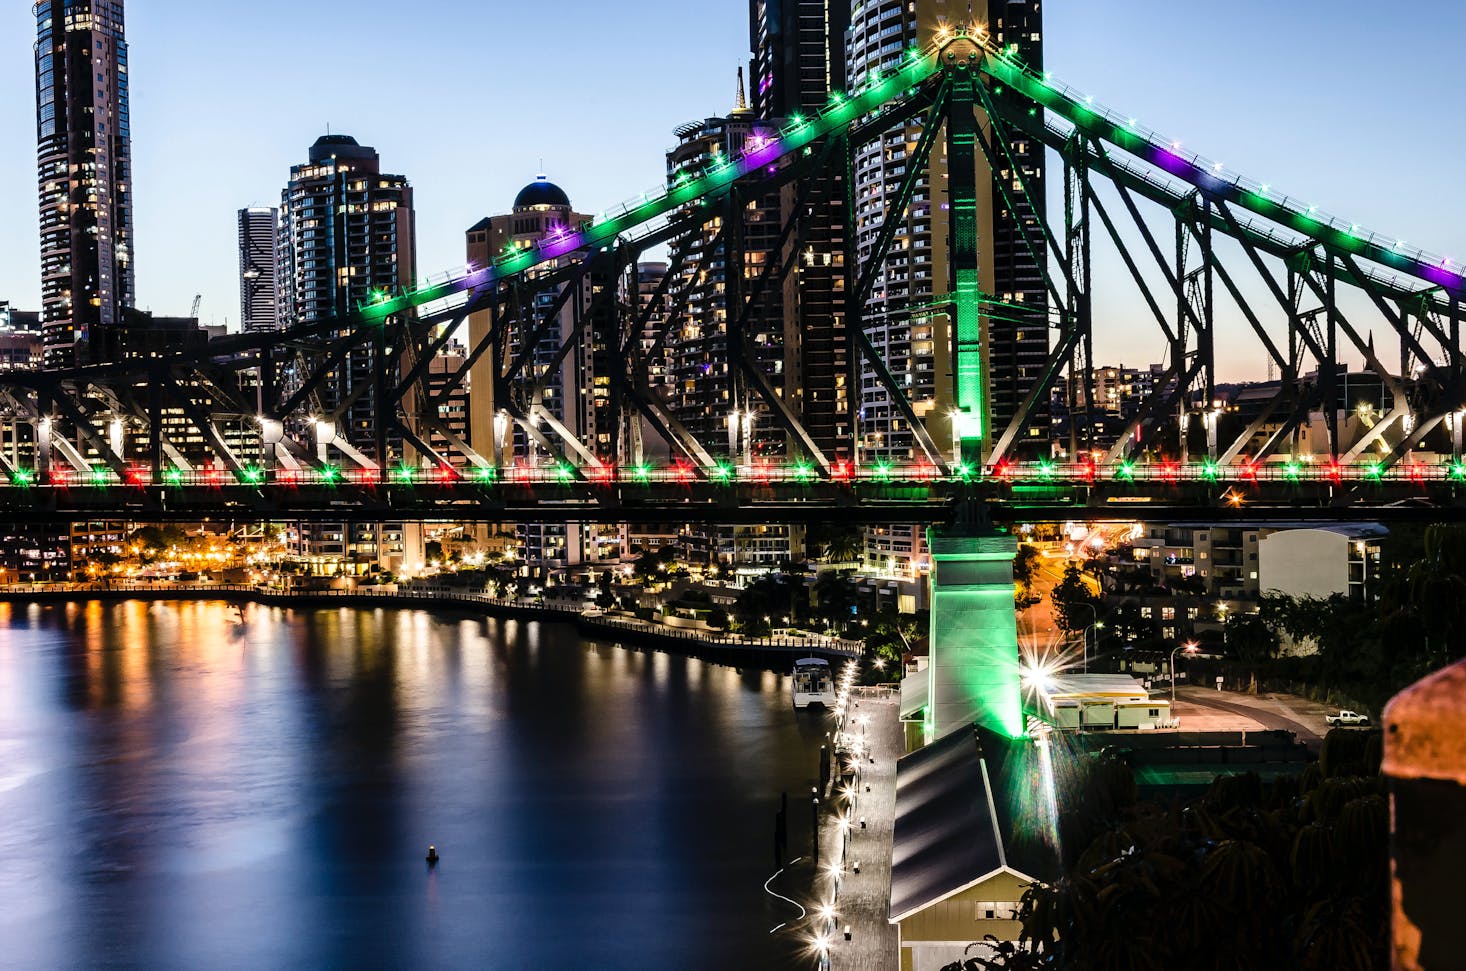 Story Bridge in Brisbane